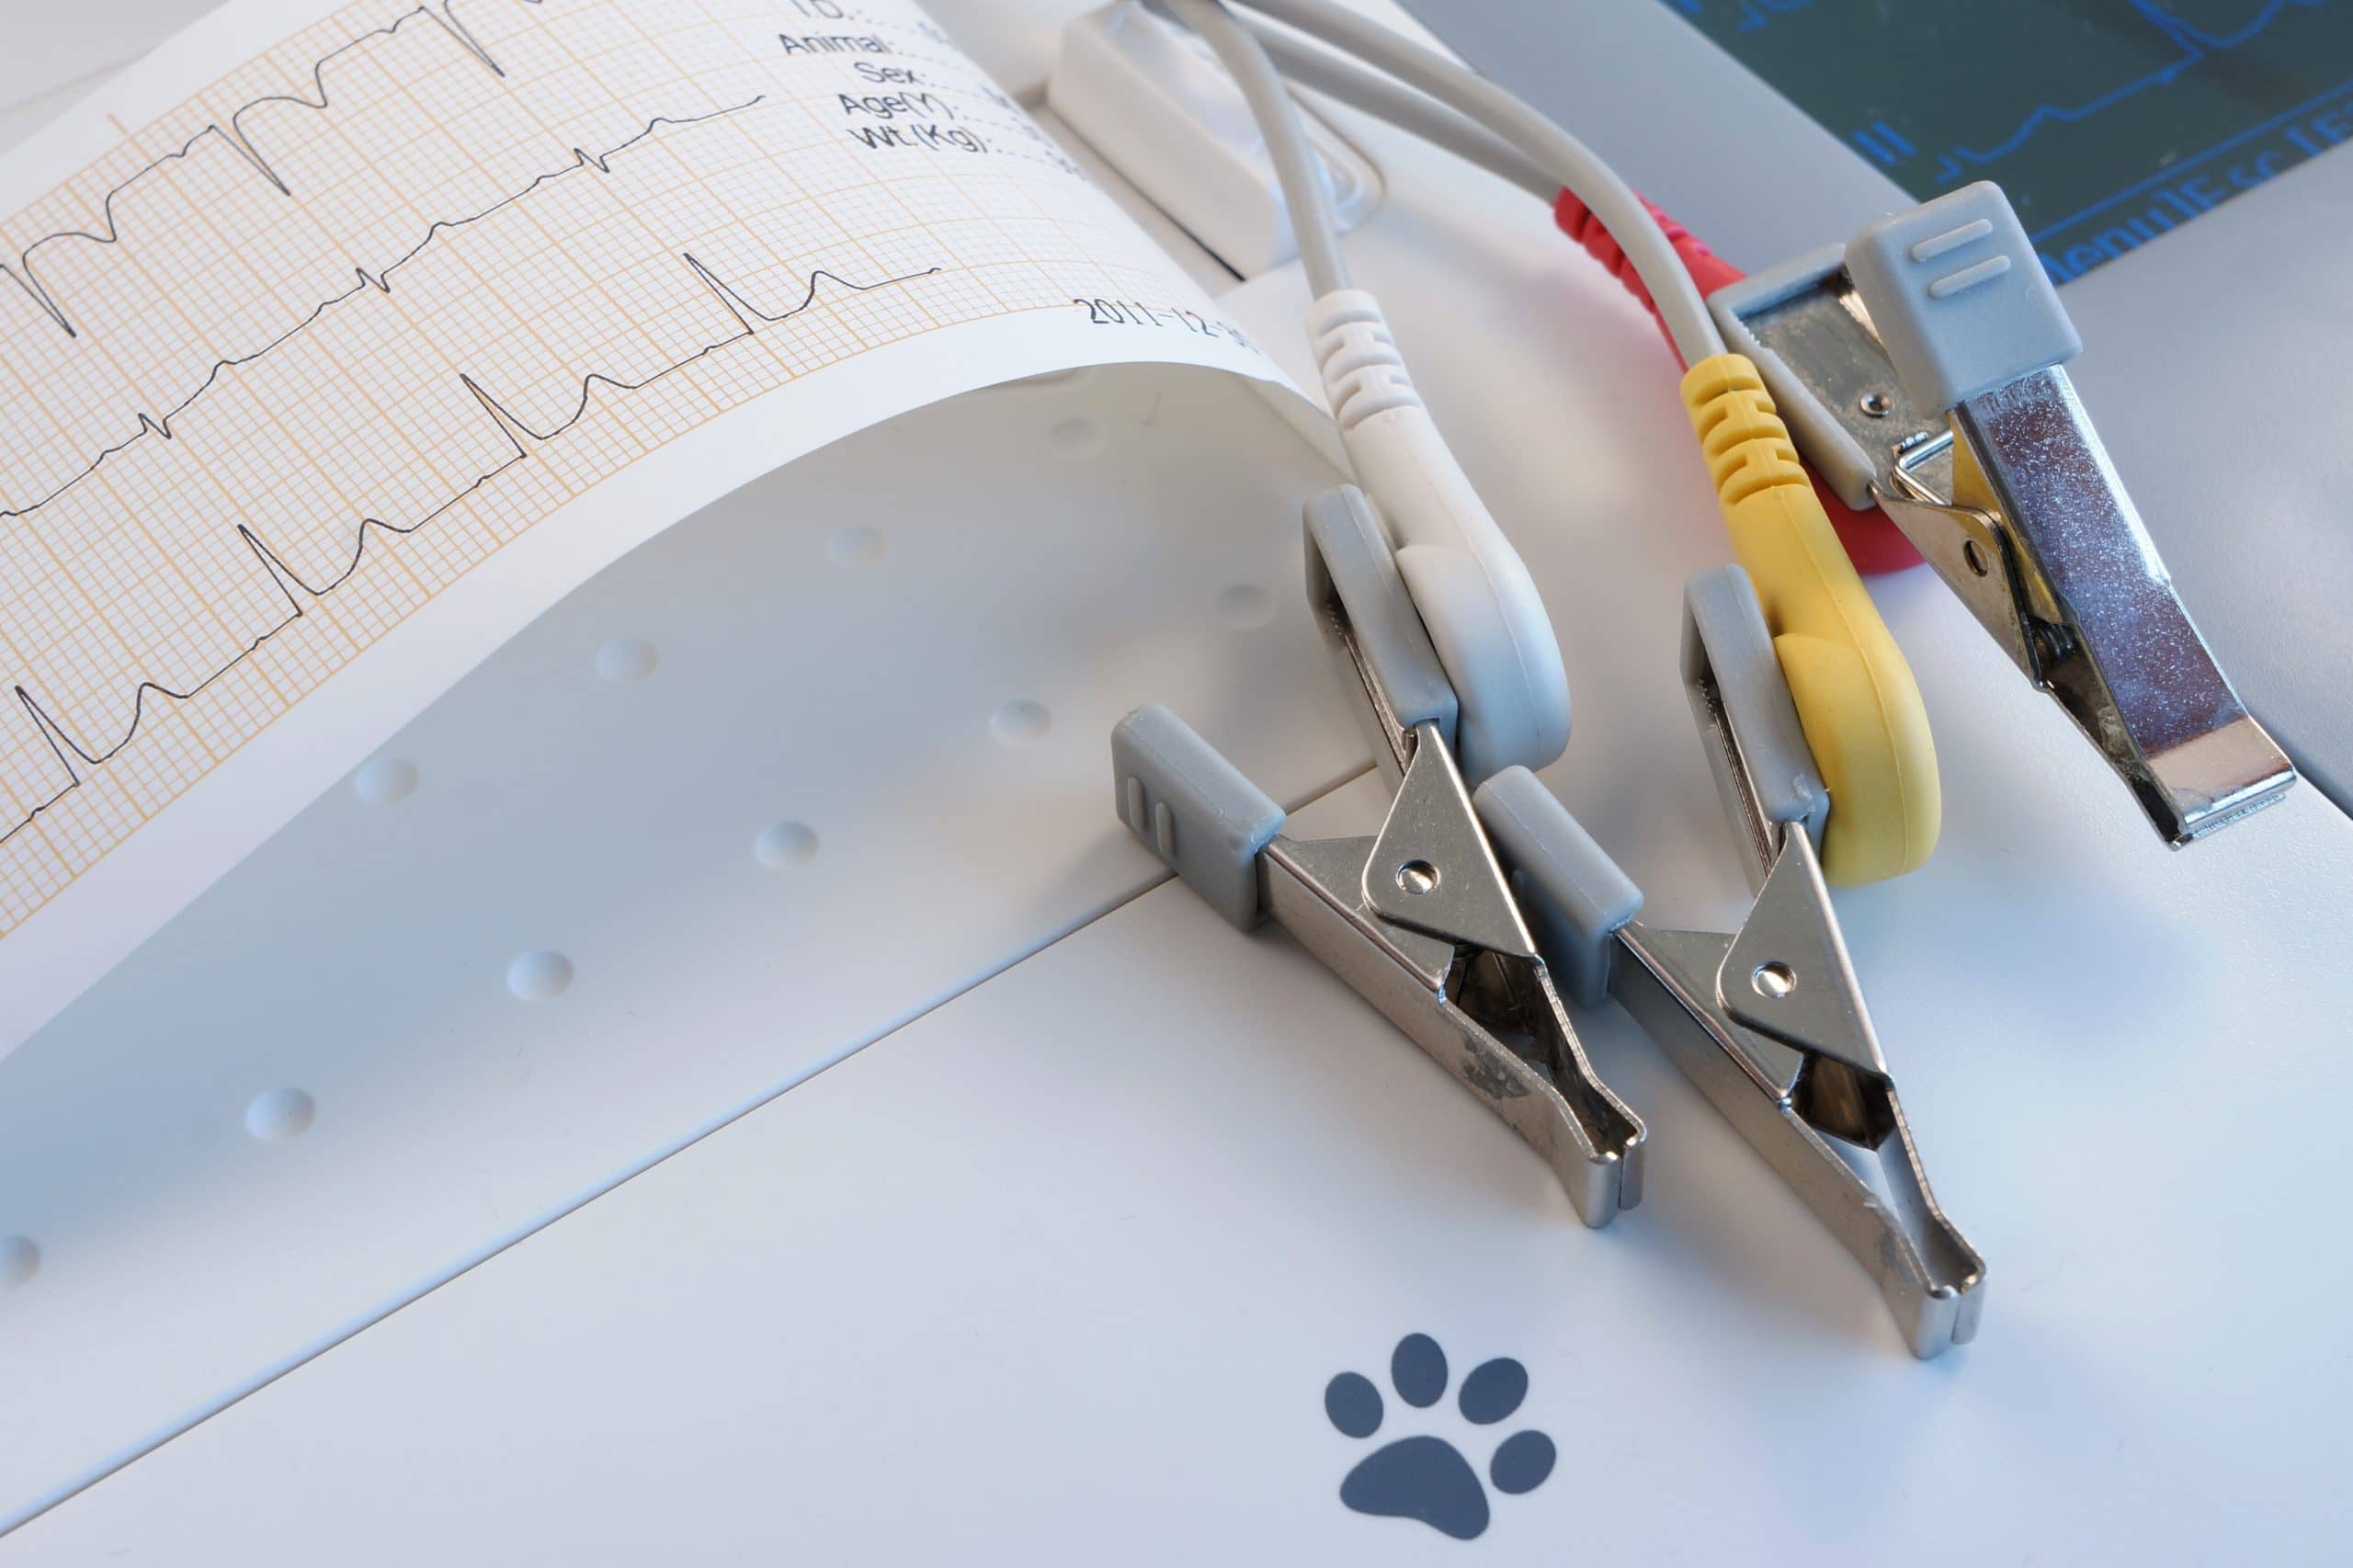 Veterinary ECG with crocodile electrodes